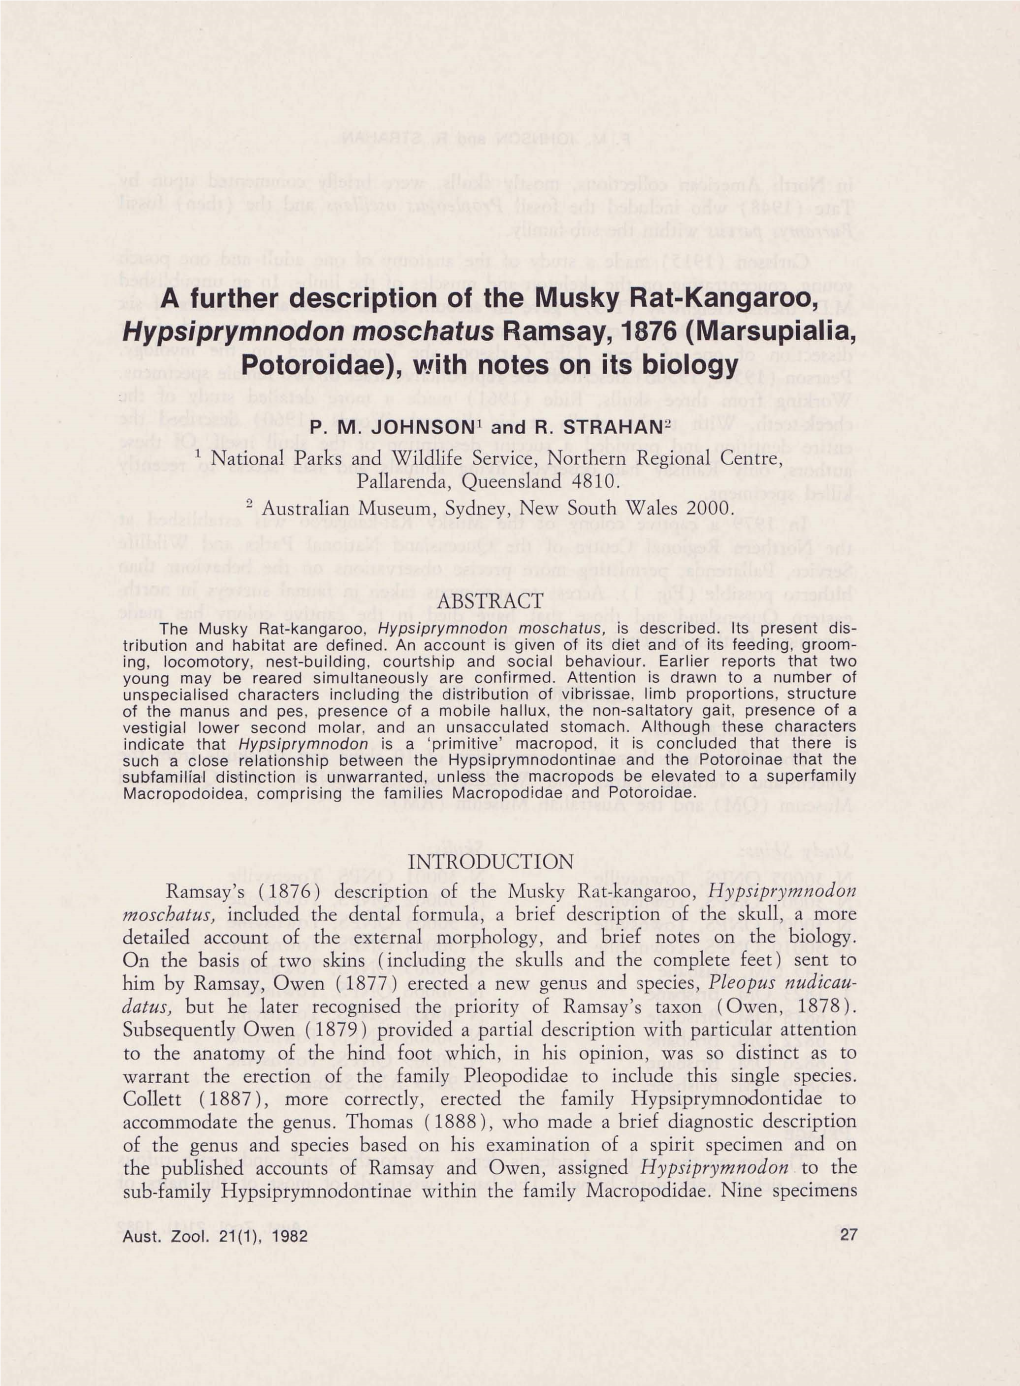 A Further Description of the Musky Rat-Kangaroo, Hypsiprymnodon Moschafus Ramsay, 1876 (Marsupialia, Potoroidae), with Notes on Its Biology